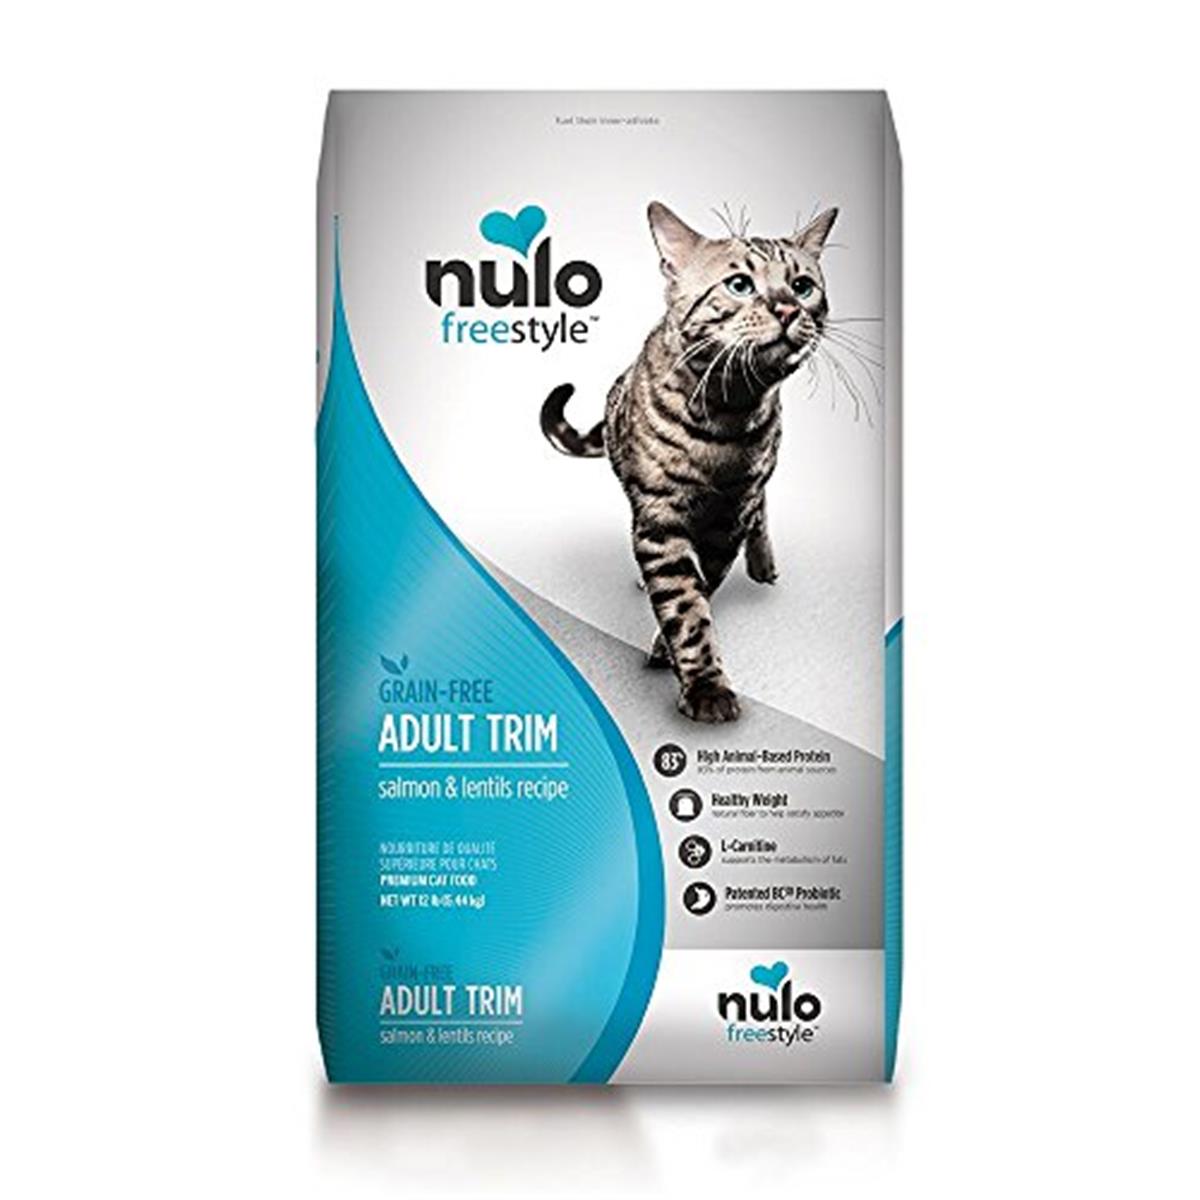 Nd02041 Adult Trim Grain-free Dry Cat Food - Salmon & Lentils - 12 Lbs